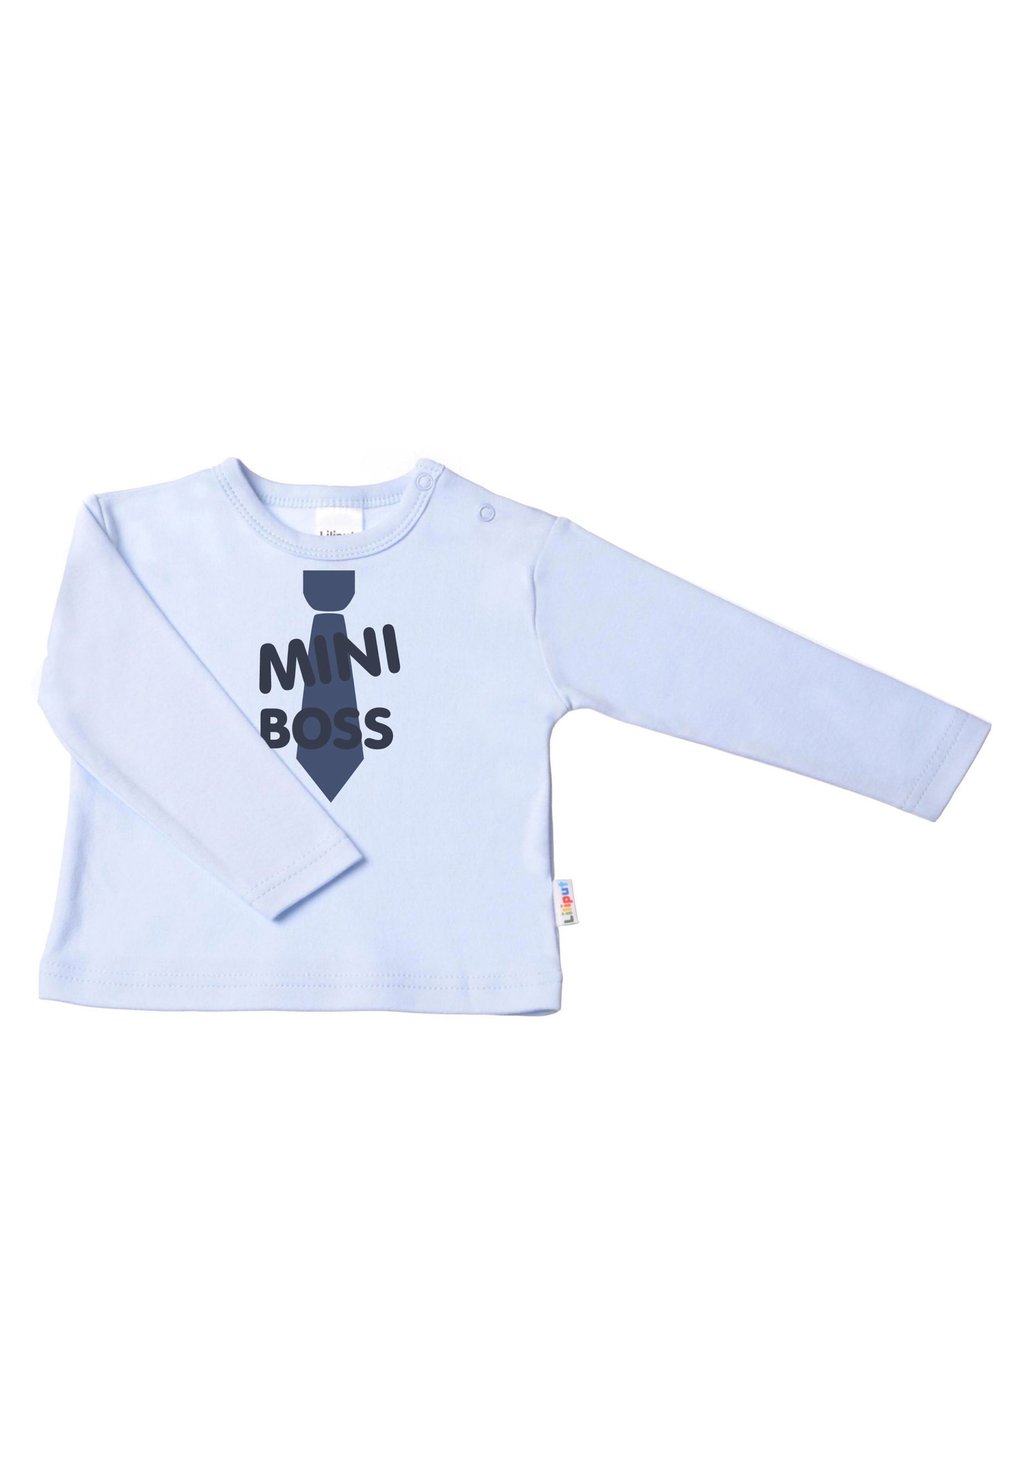 Рубашка с длинным рукавом MINI BOSS Liliput, цвет hellblau толстовка mini sport liliput цвет hellblau